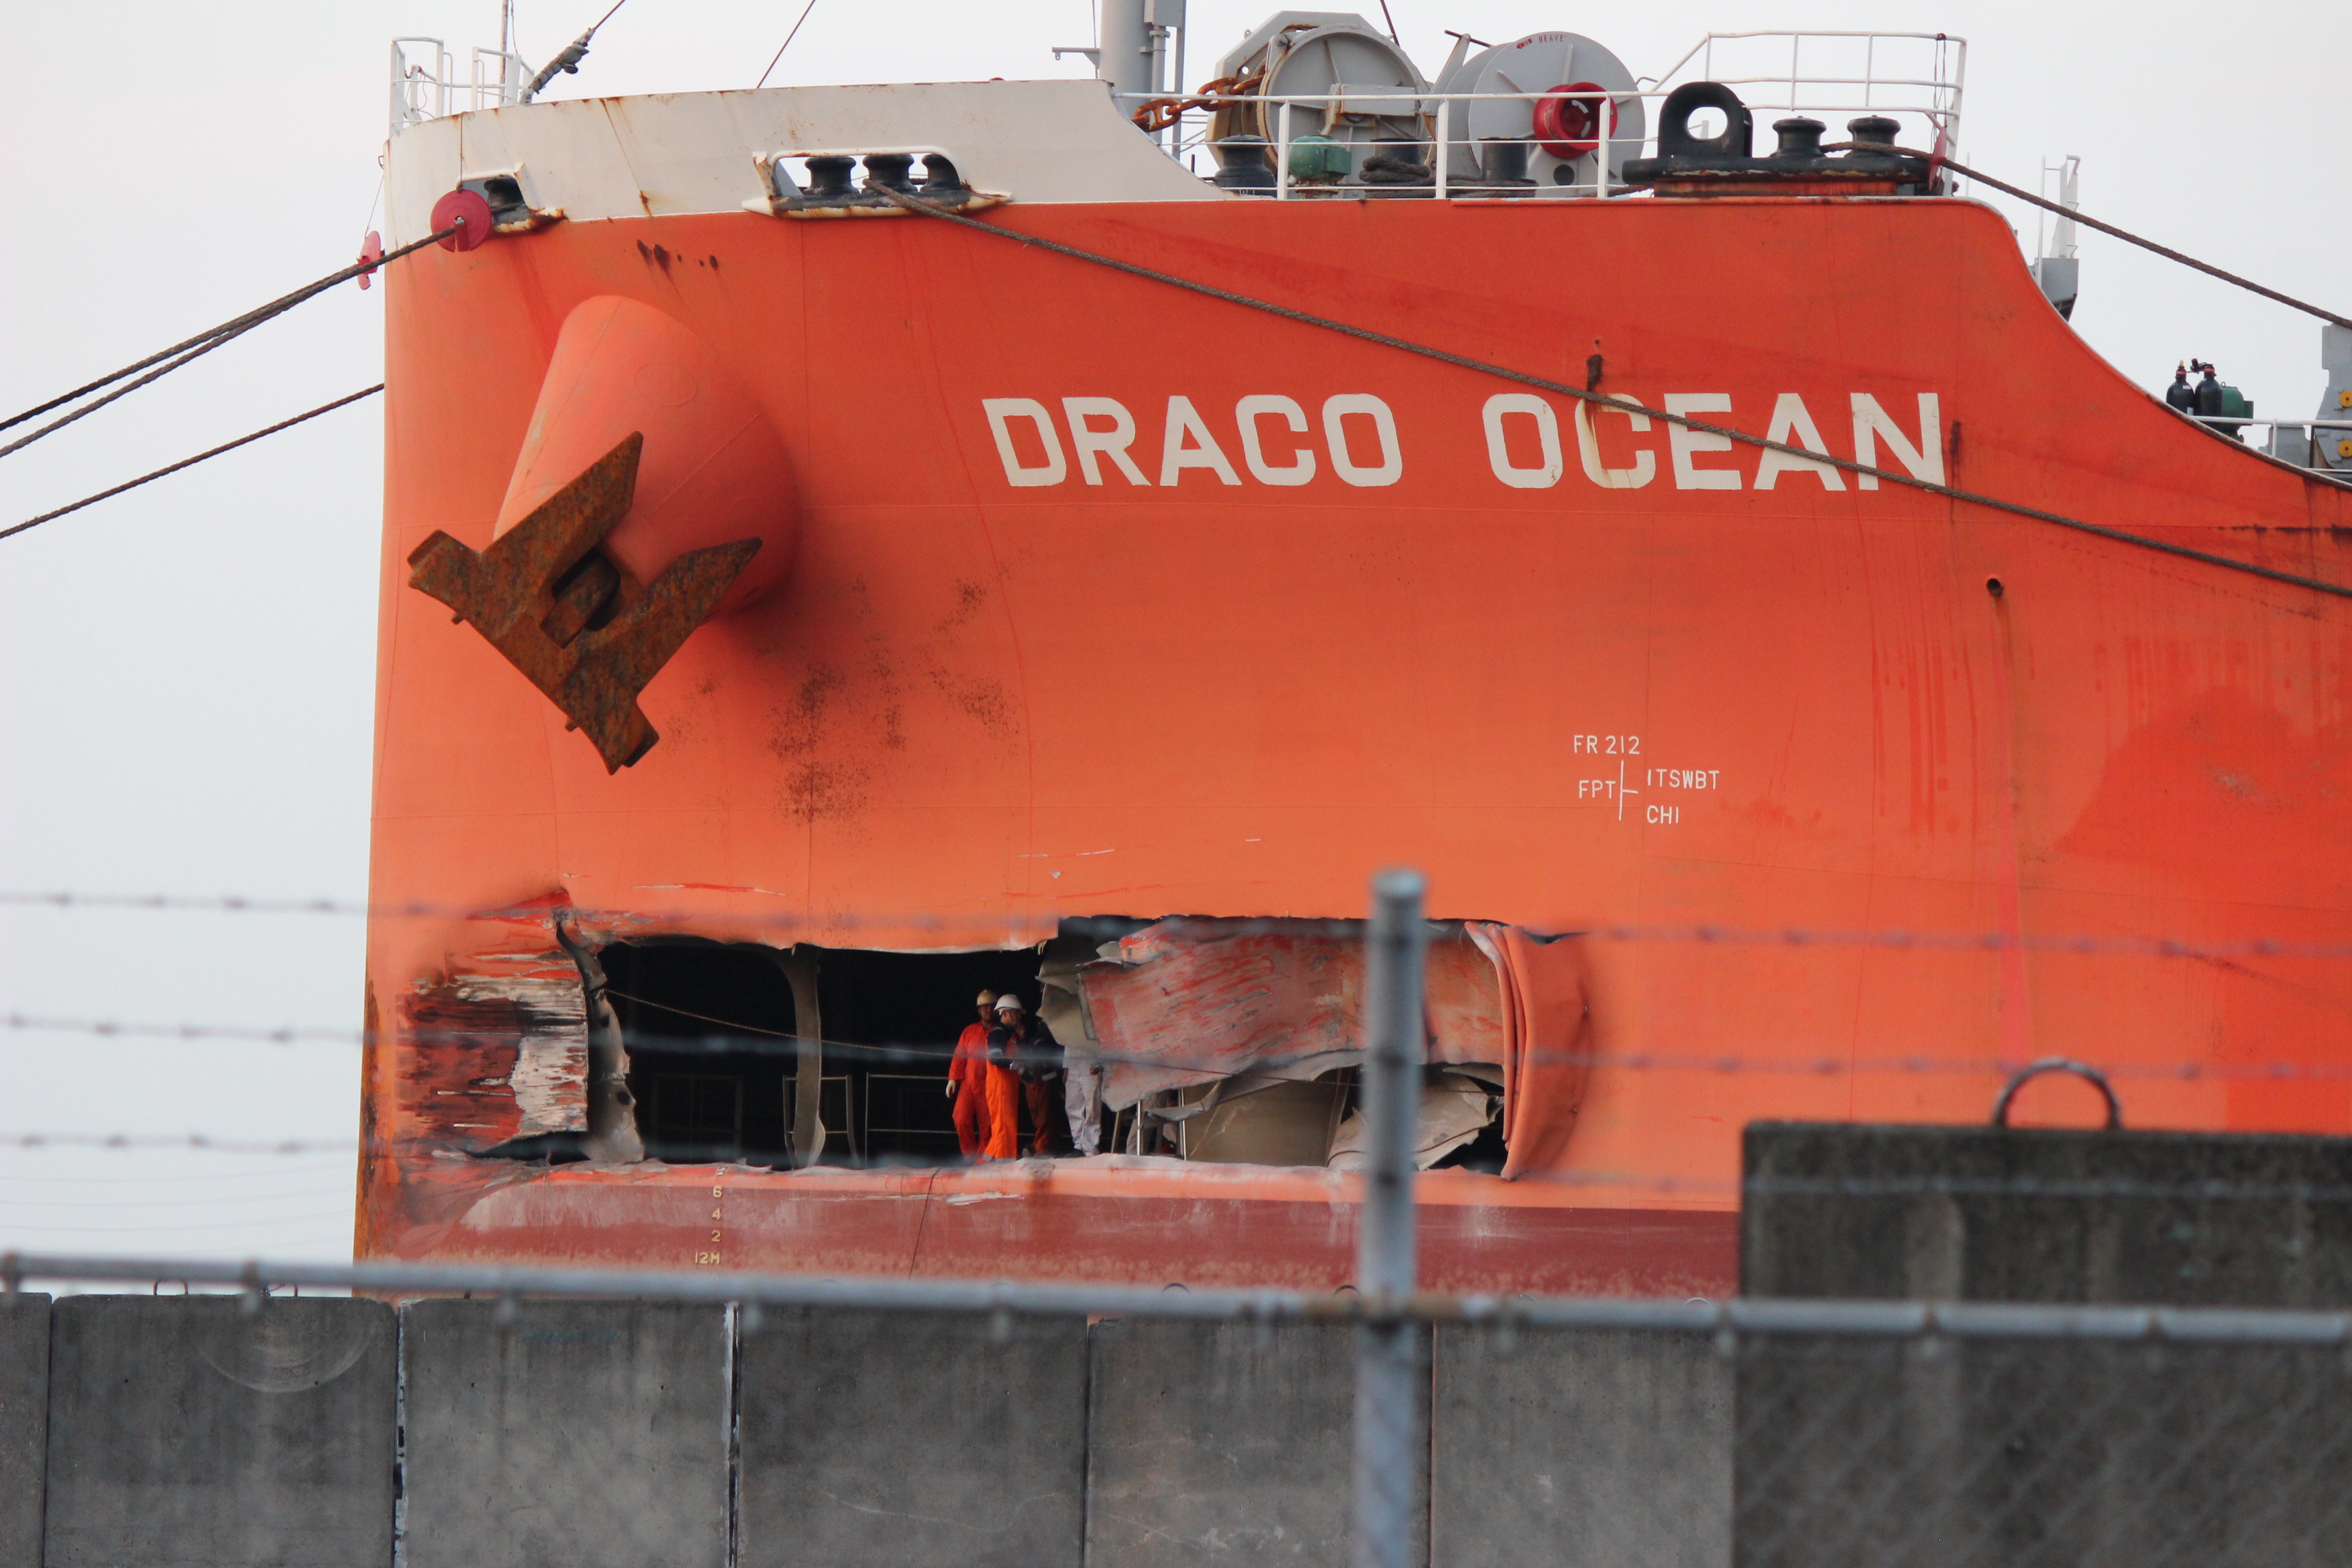 Draco Ocean accident